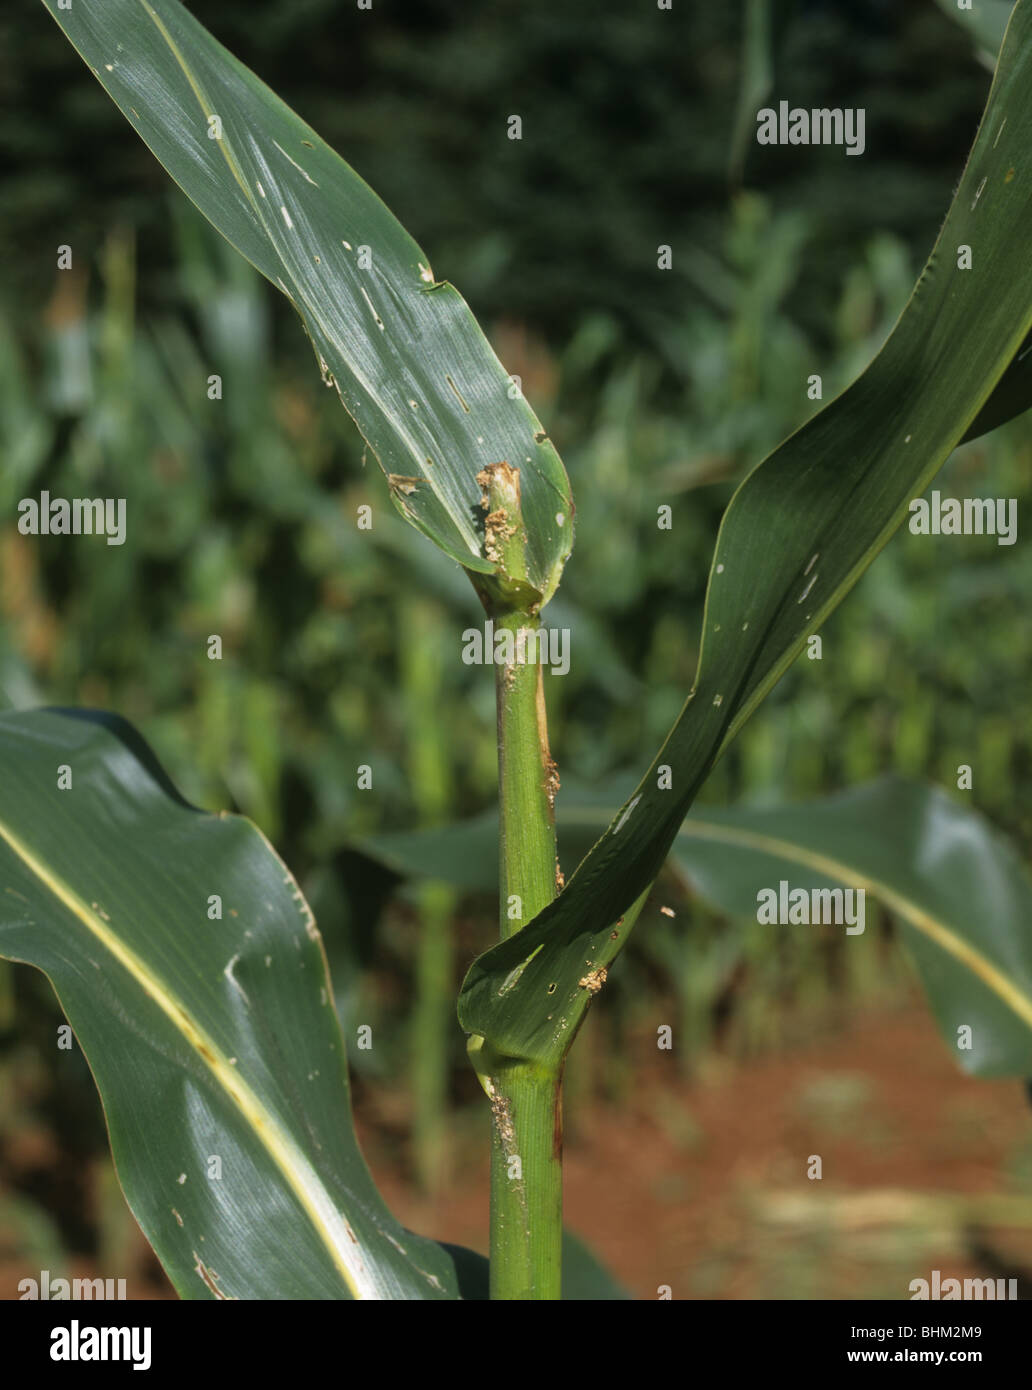 European corn borer (Ostrinia nubialis) damage to maize or corn shoot Stock Photo